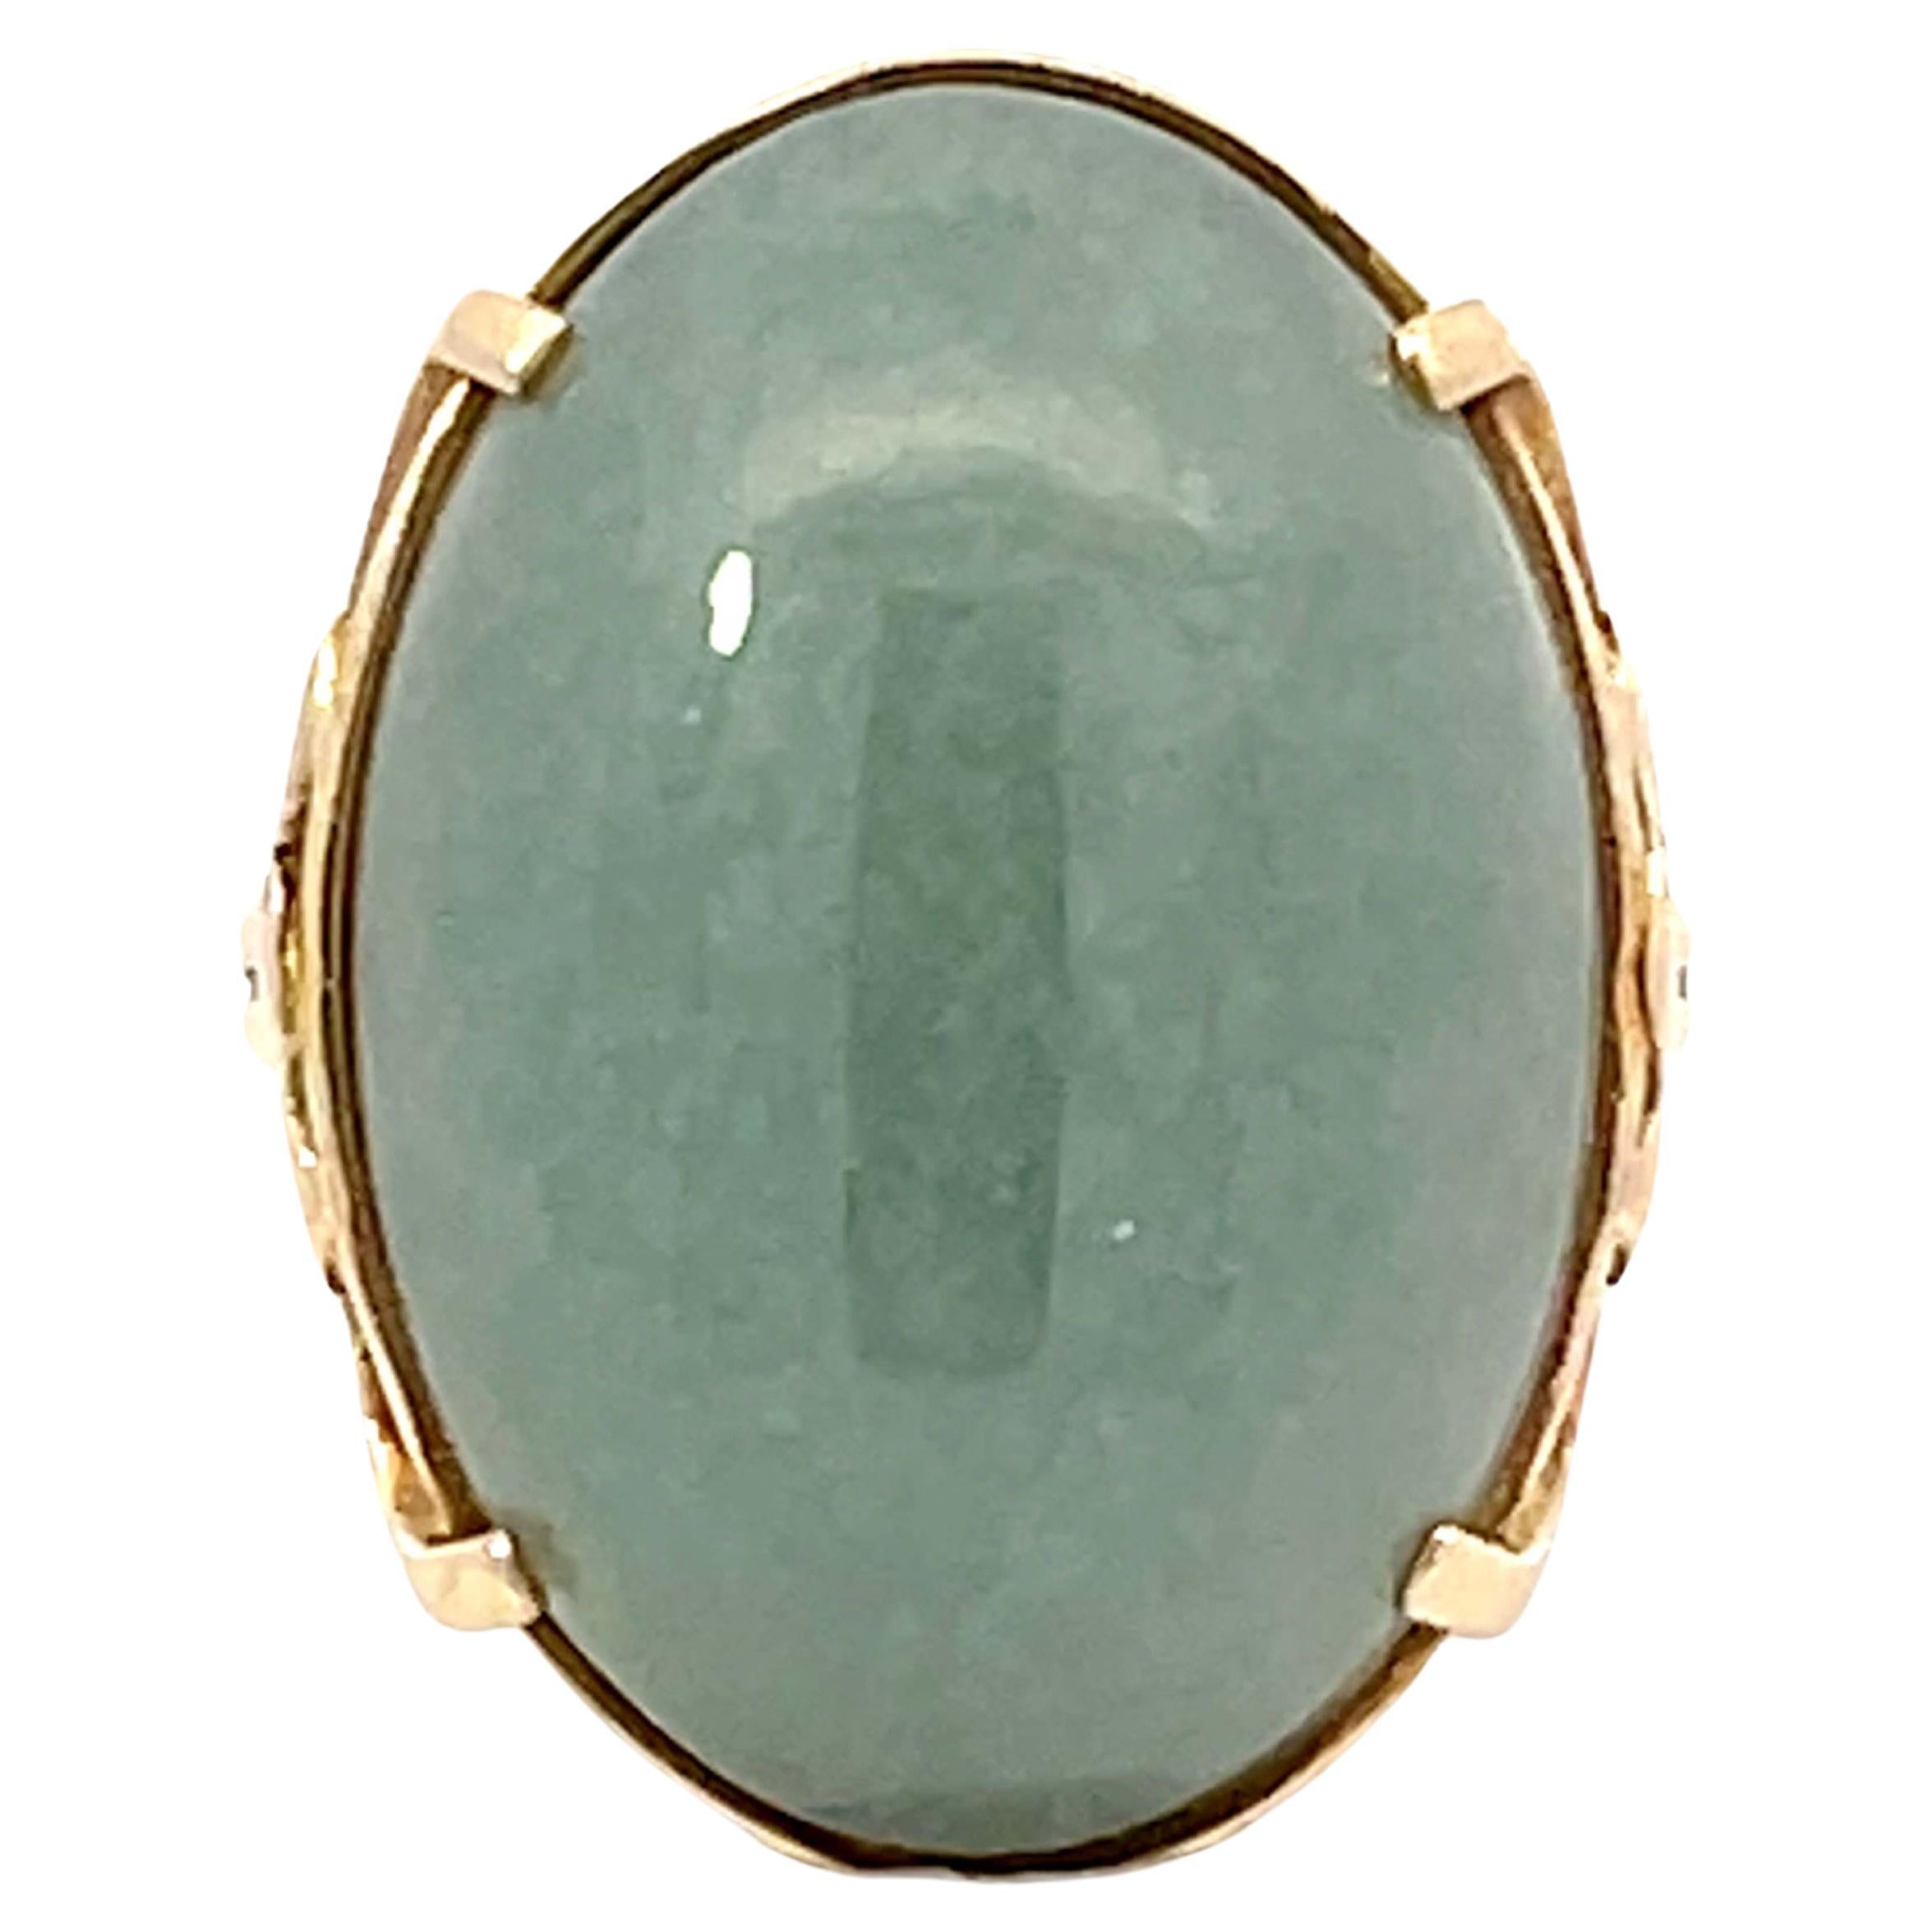 Bague Mings en or jaune 14 carats avec jade vert cabochon ovale